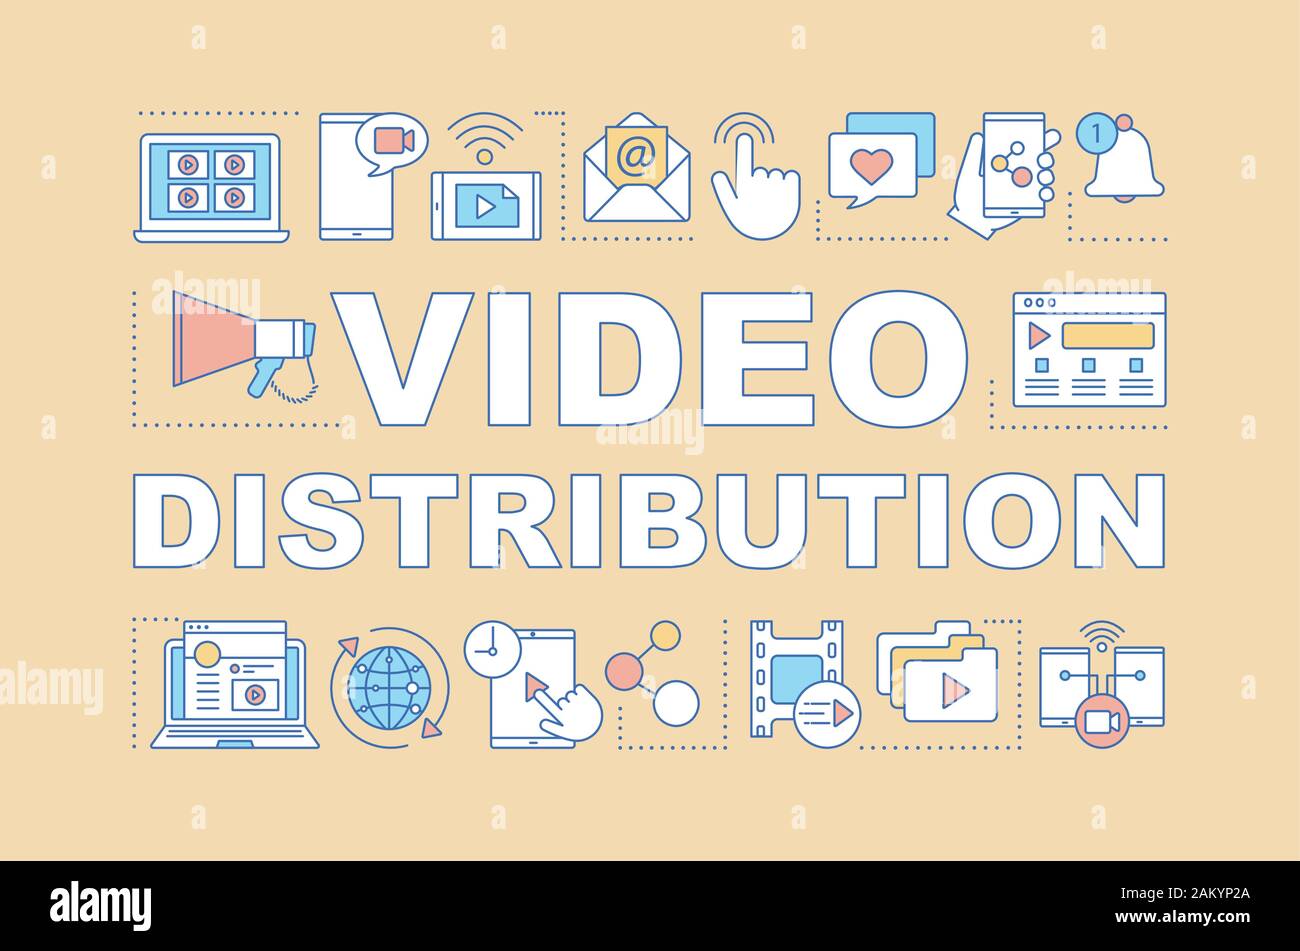 Video distribution word concepts banner. Streaming, hosting service. Video sharing platform